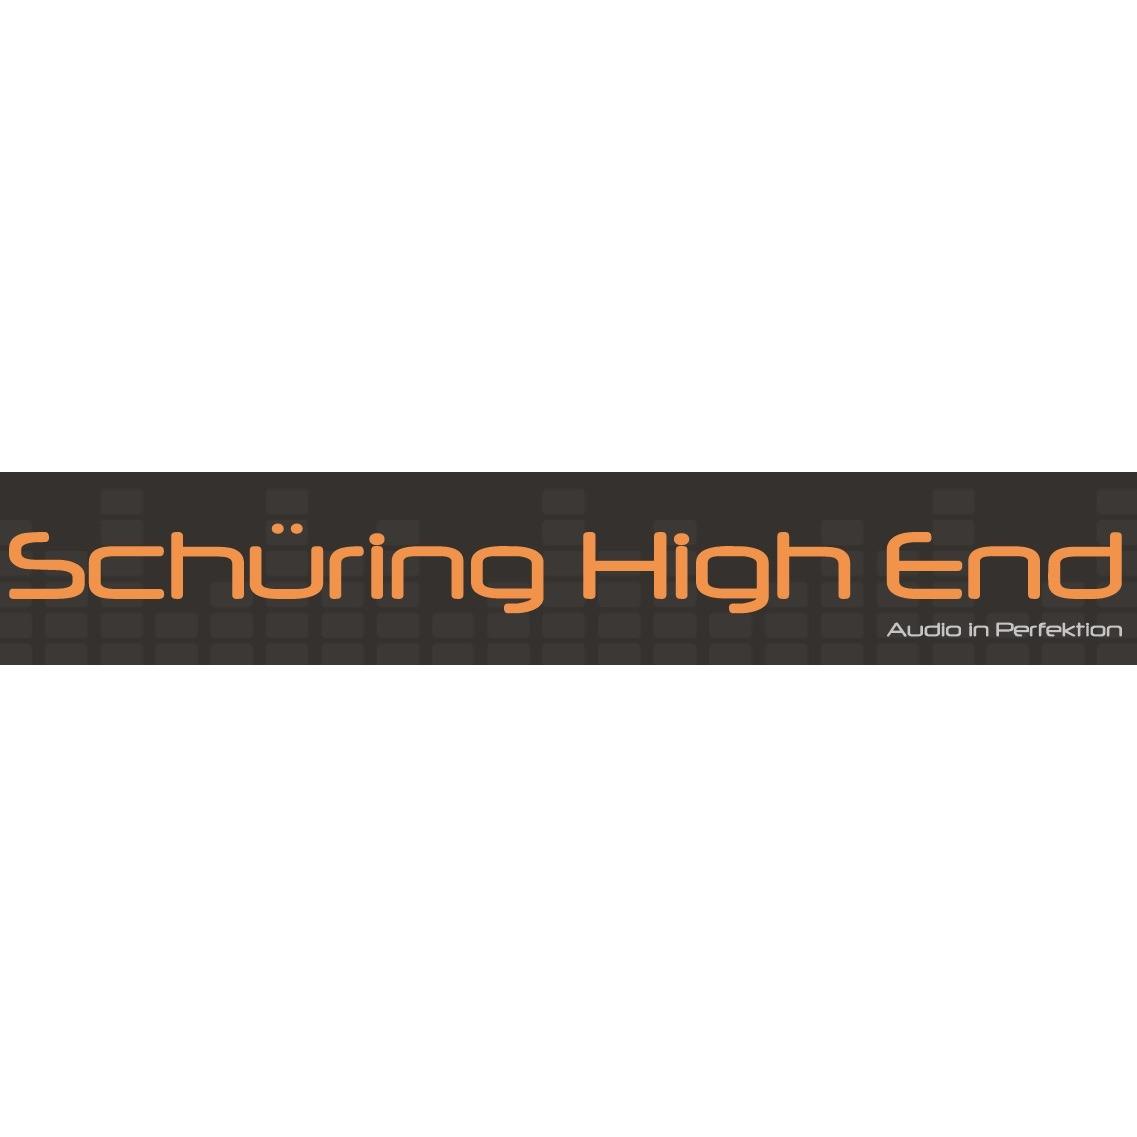 Schüring High End Hifi Studio in in Reinbek bei Hamburg Logo